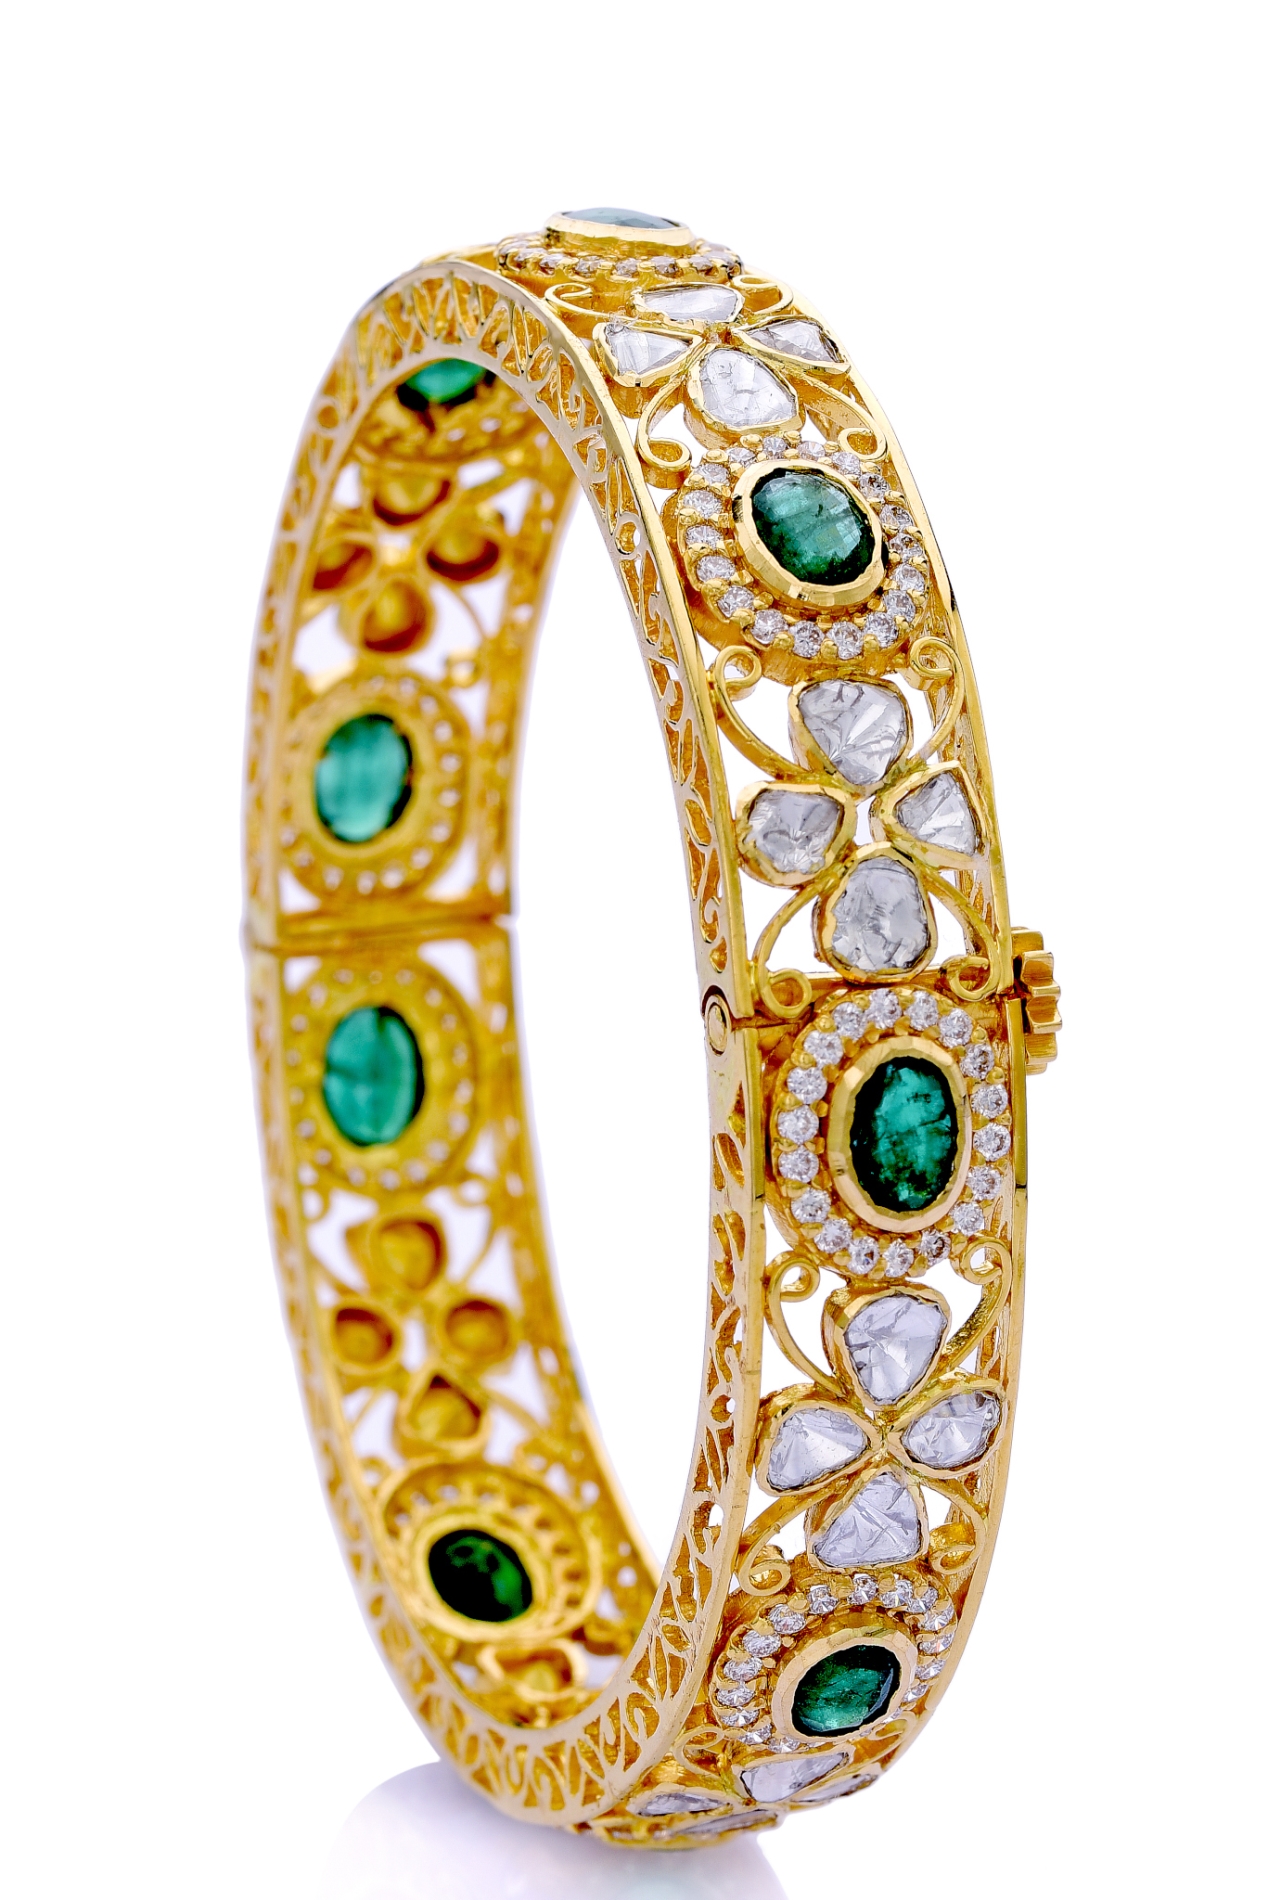 Buy 22ct Emerald and polki diamond studded gold kada online krishnapearls